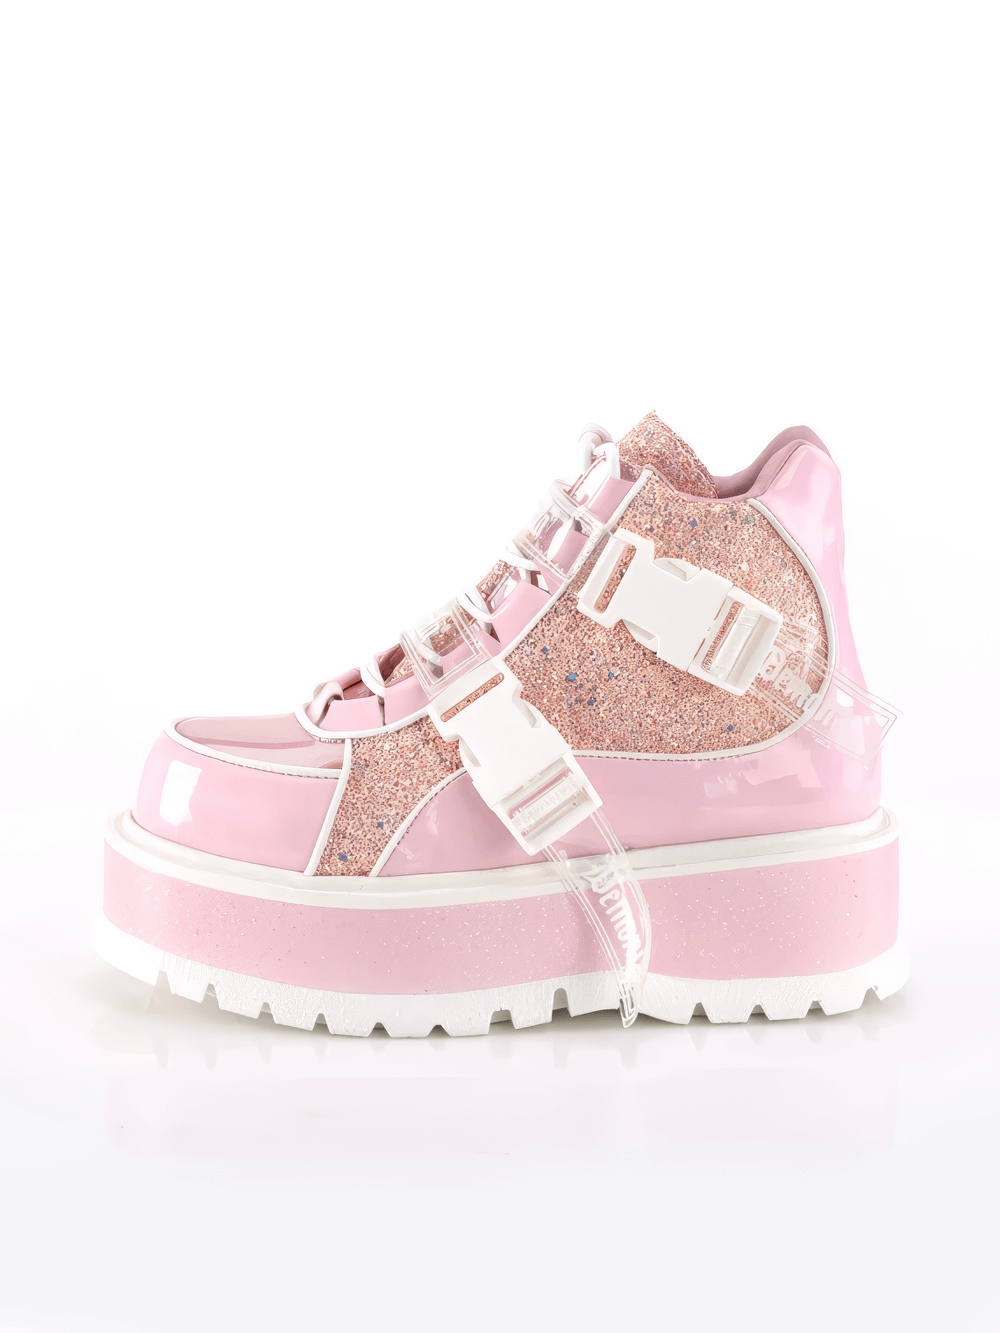 DEMONIA Women's Glitter Strap Pink Platform Ankle Boots